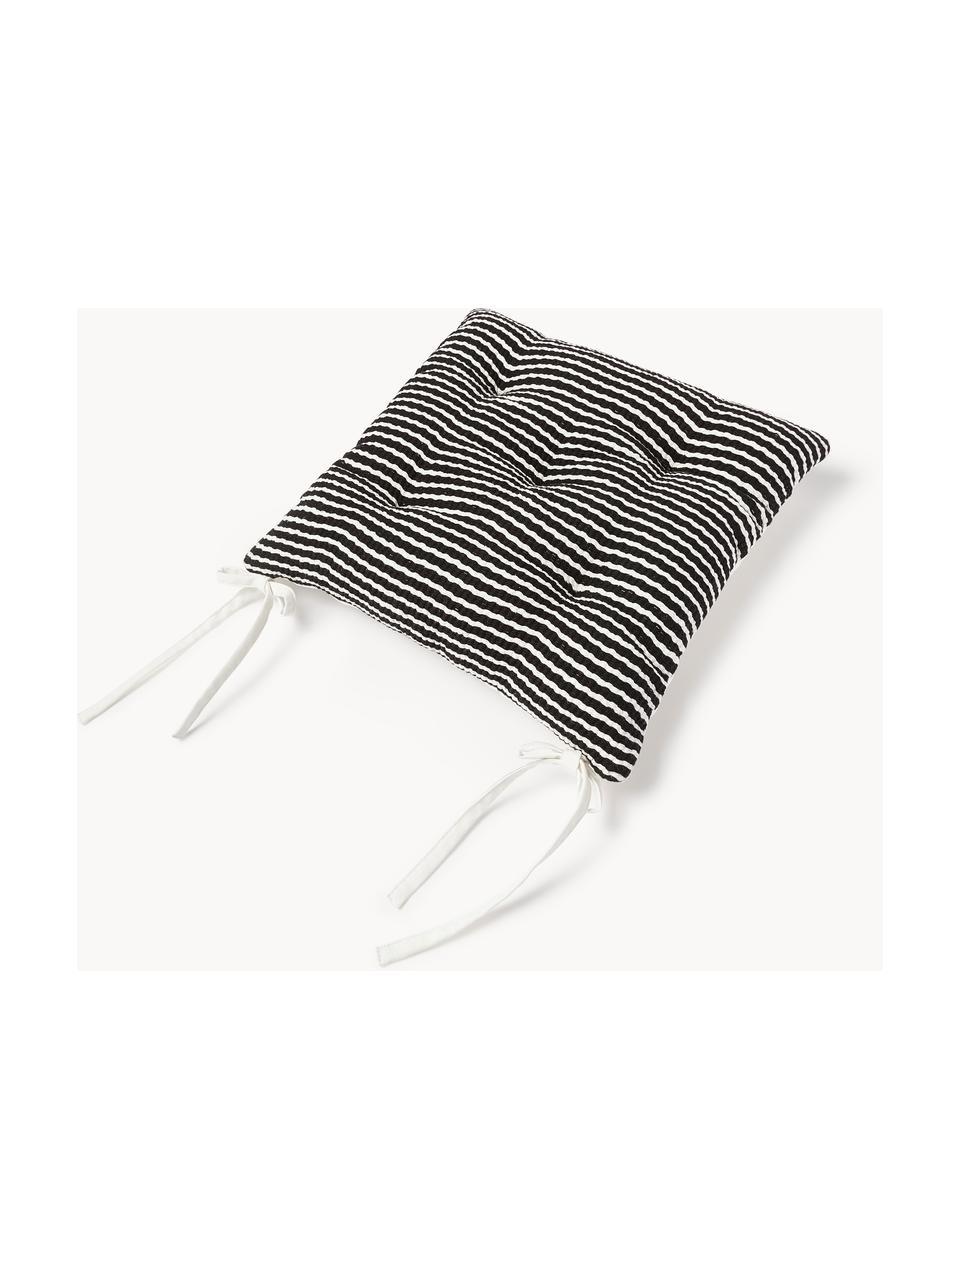 Poef Akesha met getuft zigzagpatroon, Zwart, wit, B 40 x L 40 cm